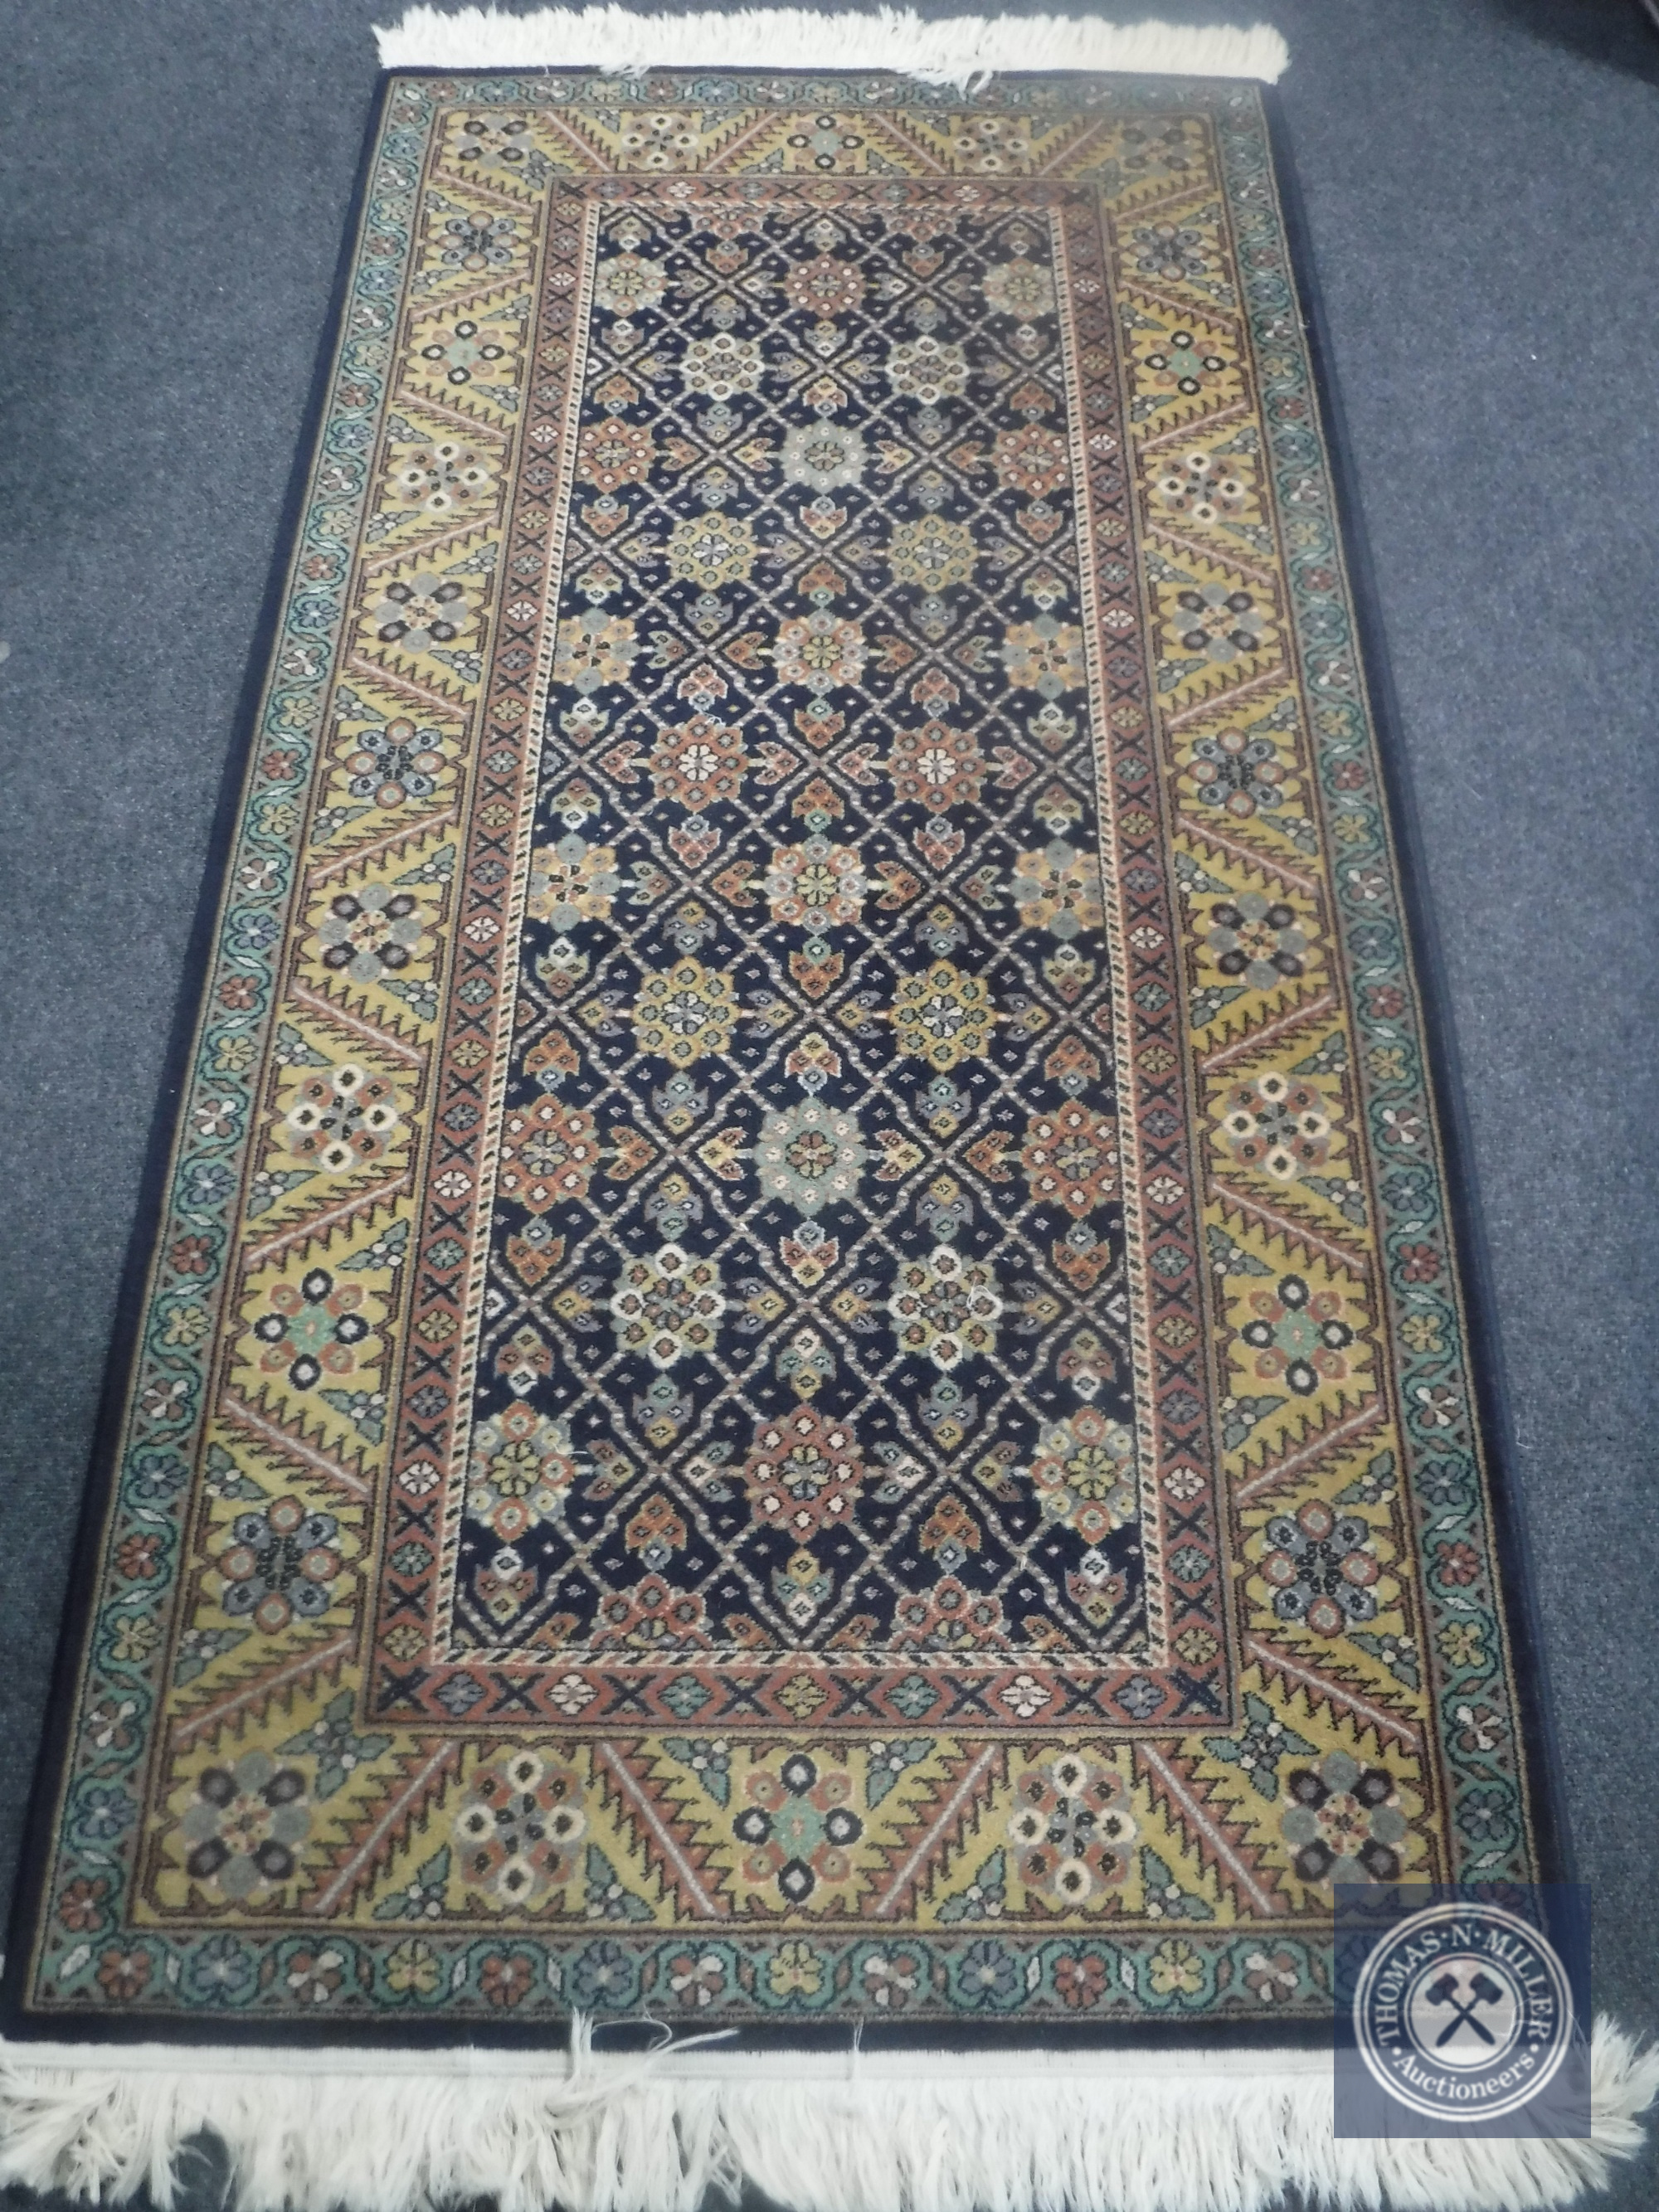 A Caucasian design rug on indigo ground,